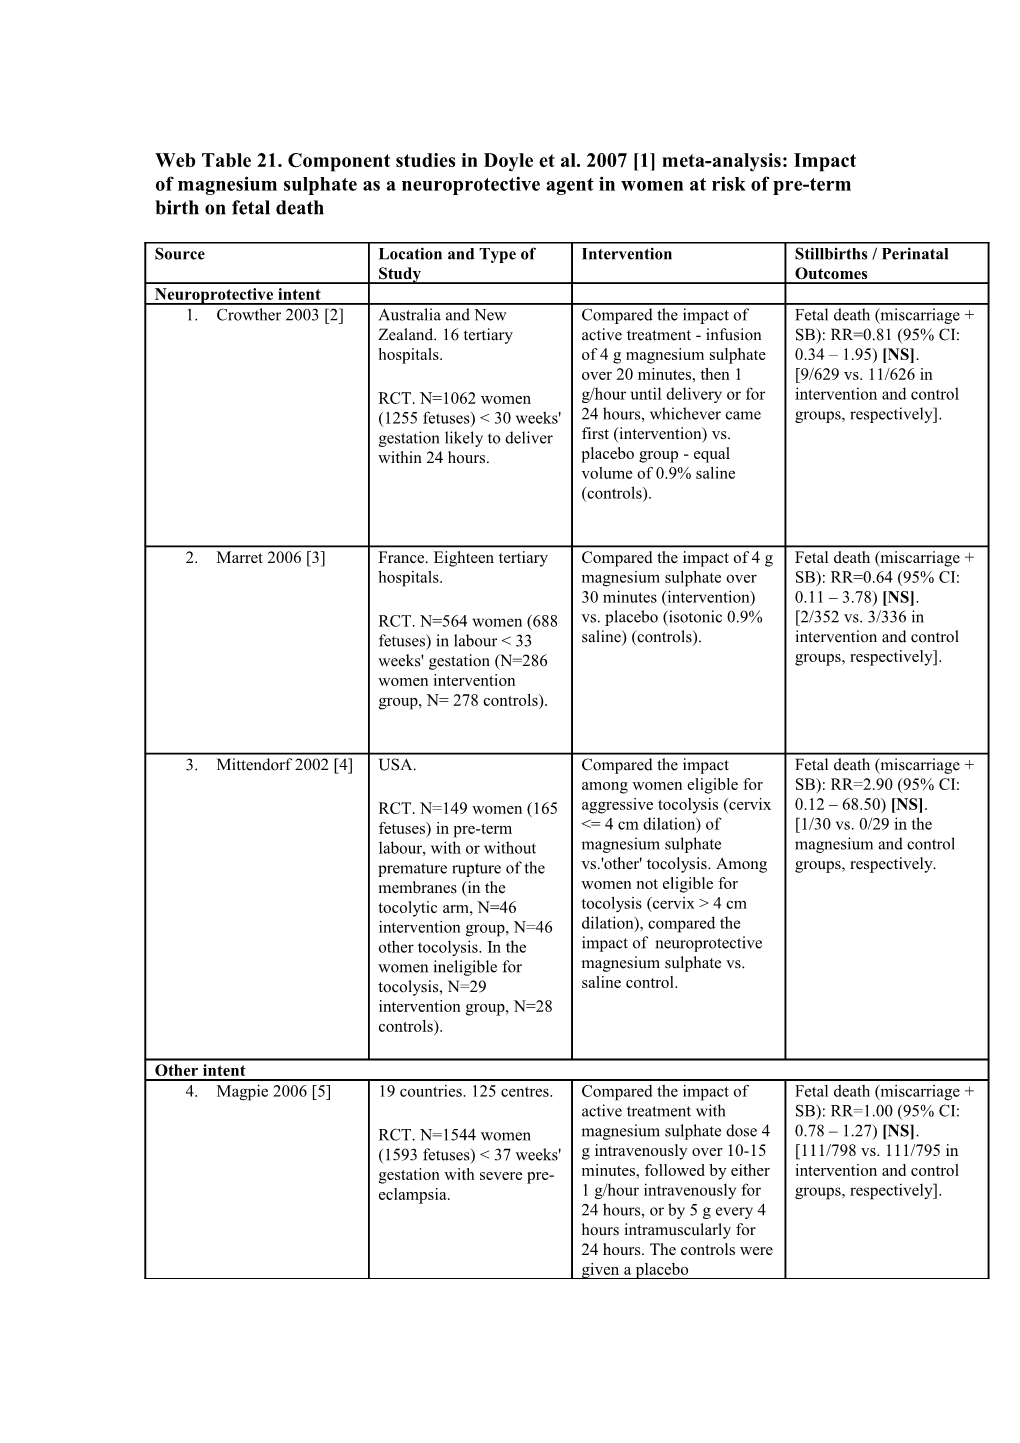 Web Table 21. Component Studies in Doyle Et Al. 2007 1 Meta-Analysis: Impact of Magnesium